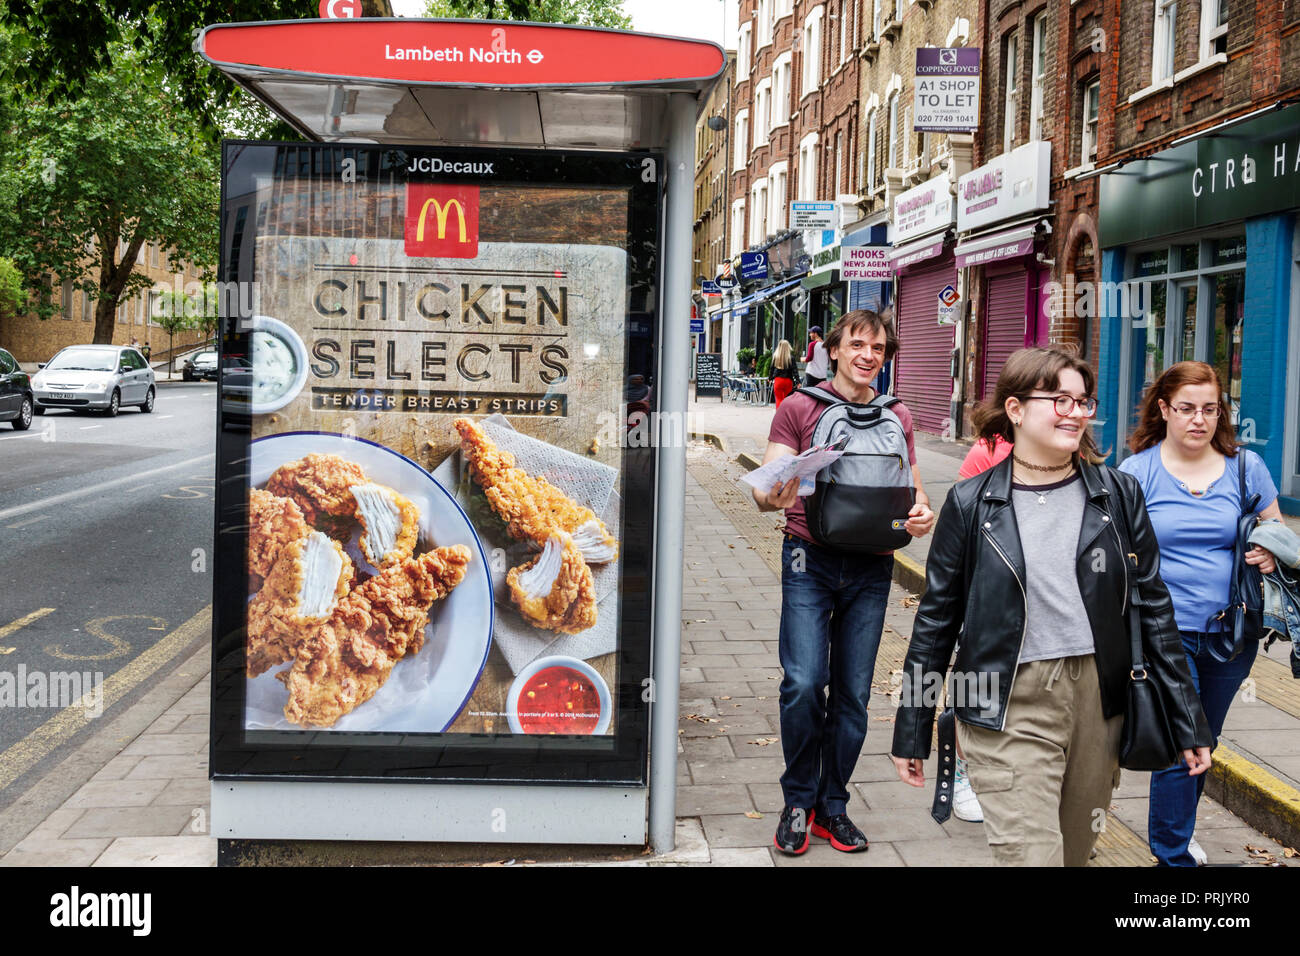 London England,UK,Lambeth North Kennington Road bus stop shelter,McDonald's ad advertising advertisement poster billboard,girls teens teenagers pedest Stock Photo